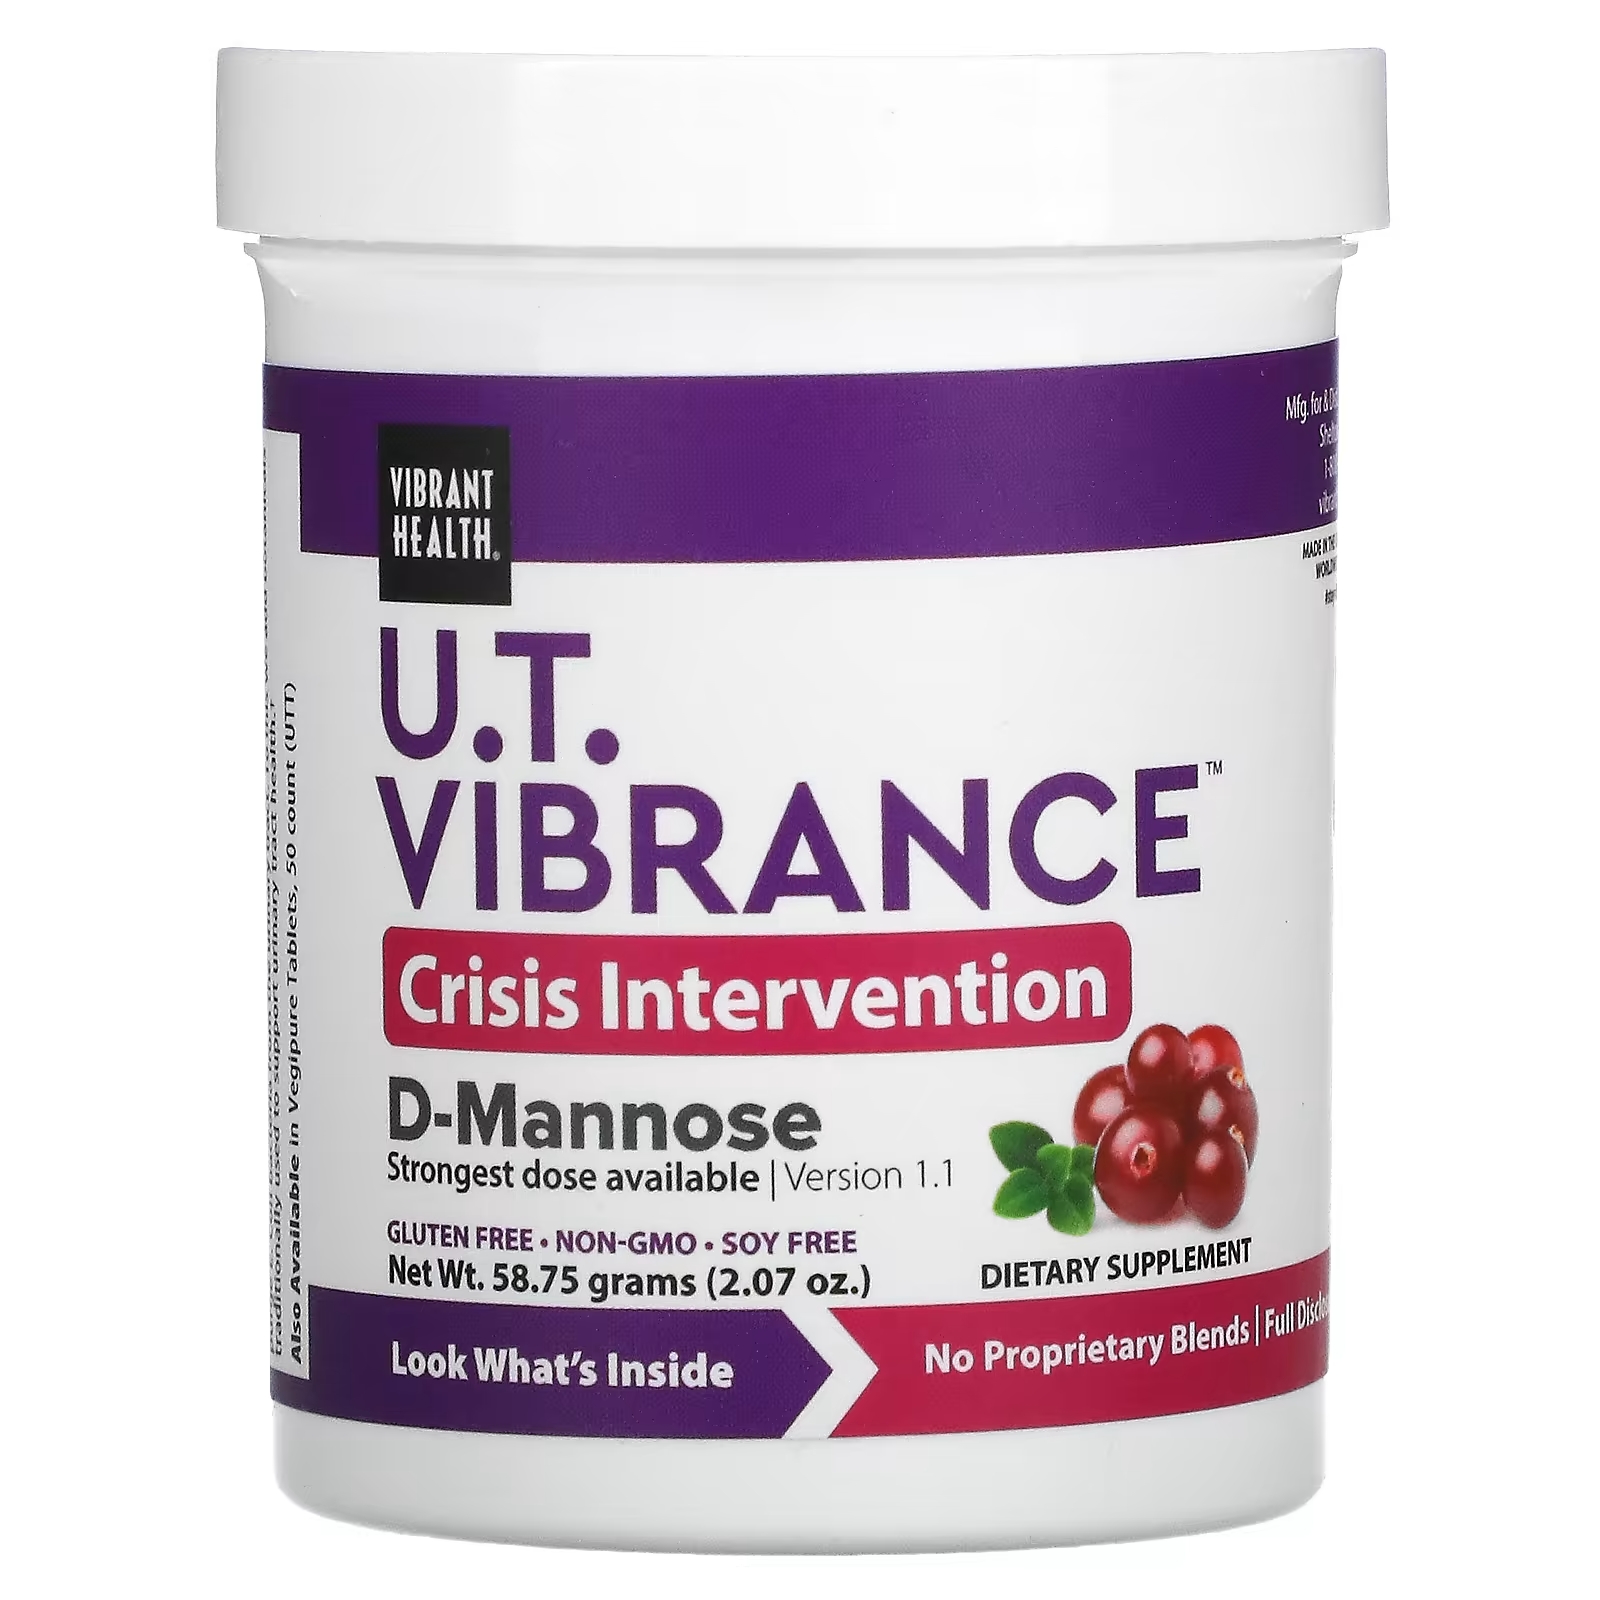 Vibrant Health UT Vibrance D-манноза 5000 мг версия 1.1, 64,55 г vibrant health ut vibrance 50 растительных таблеток